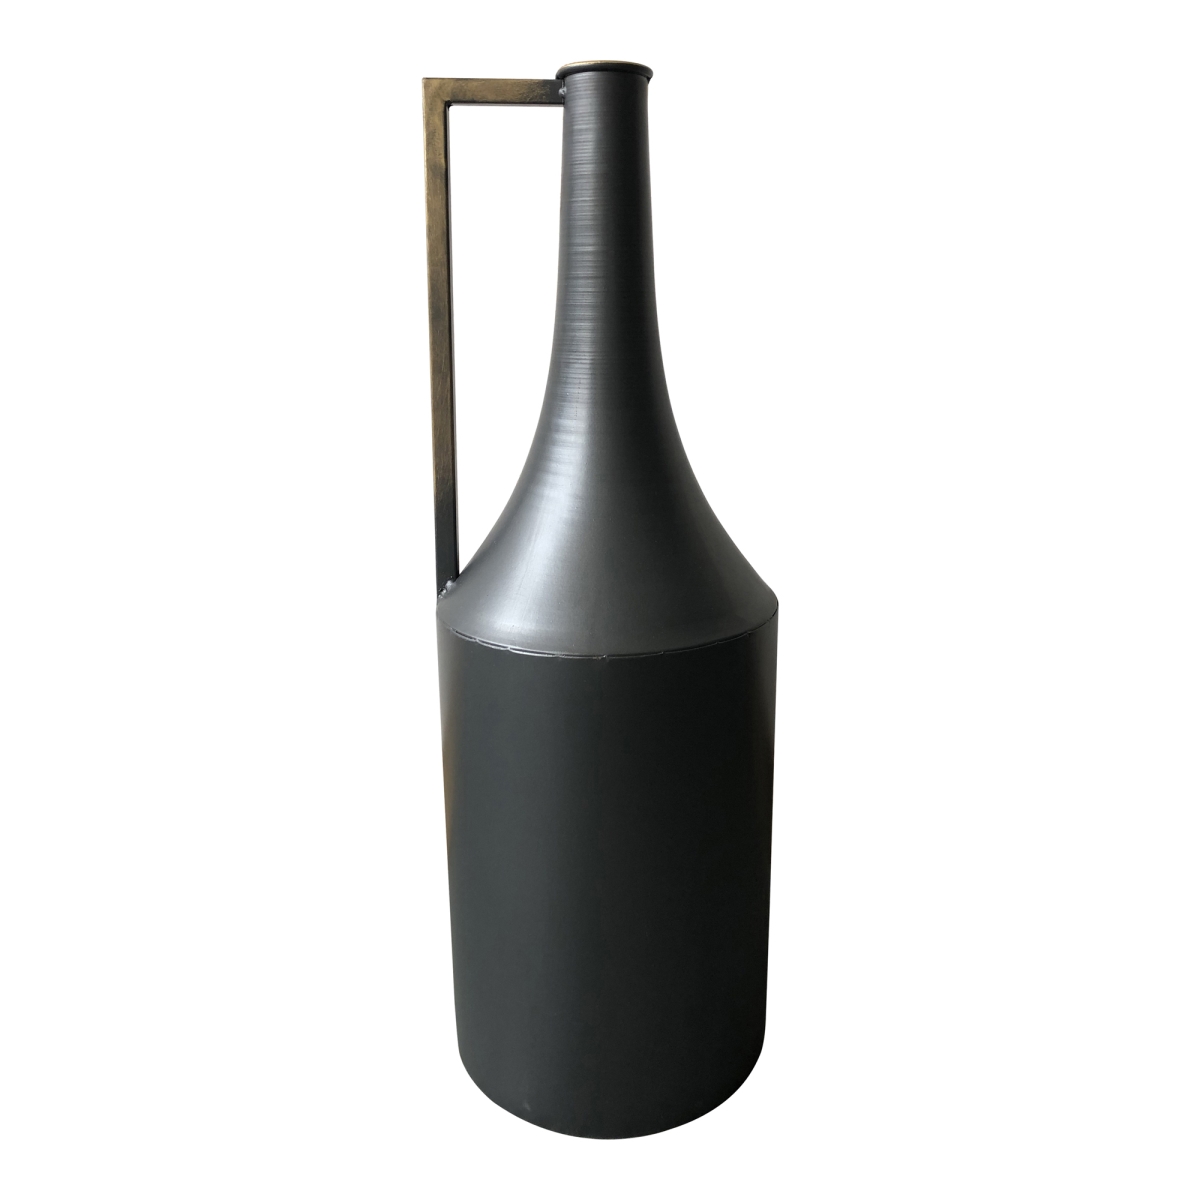 Kk-1017-02 Primus Metal Vase, Black